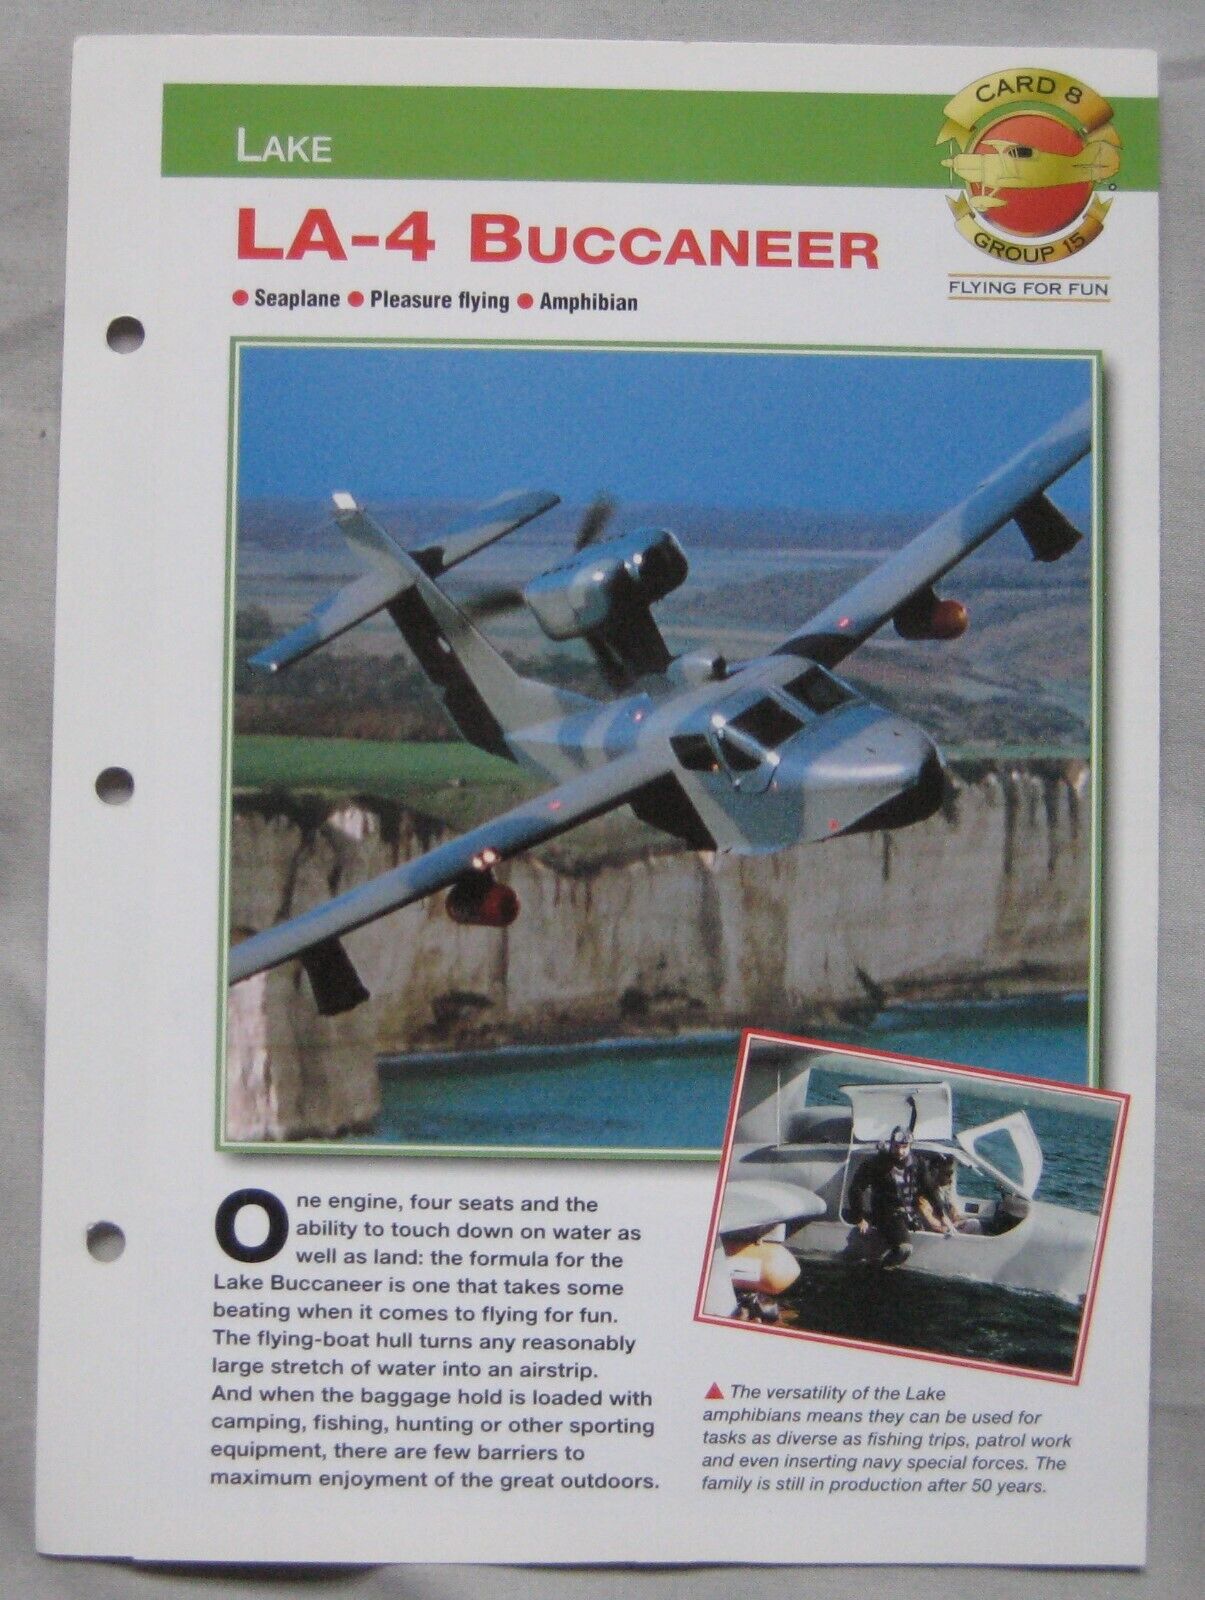 Aircraft of the World Card 8 , Group 15 - Lake LA-4 Buccaneer